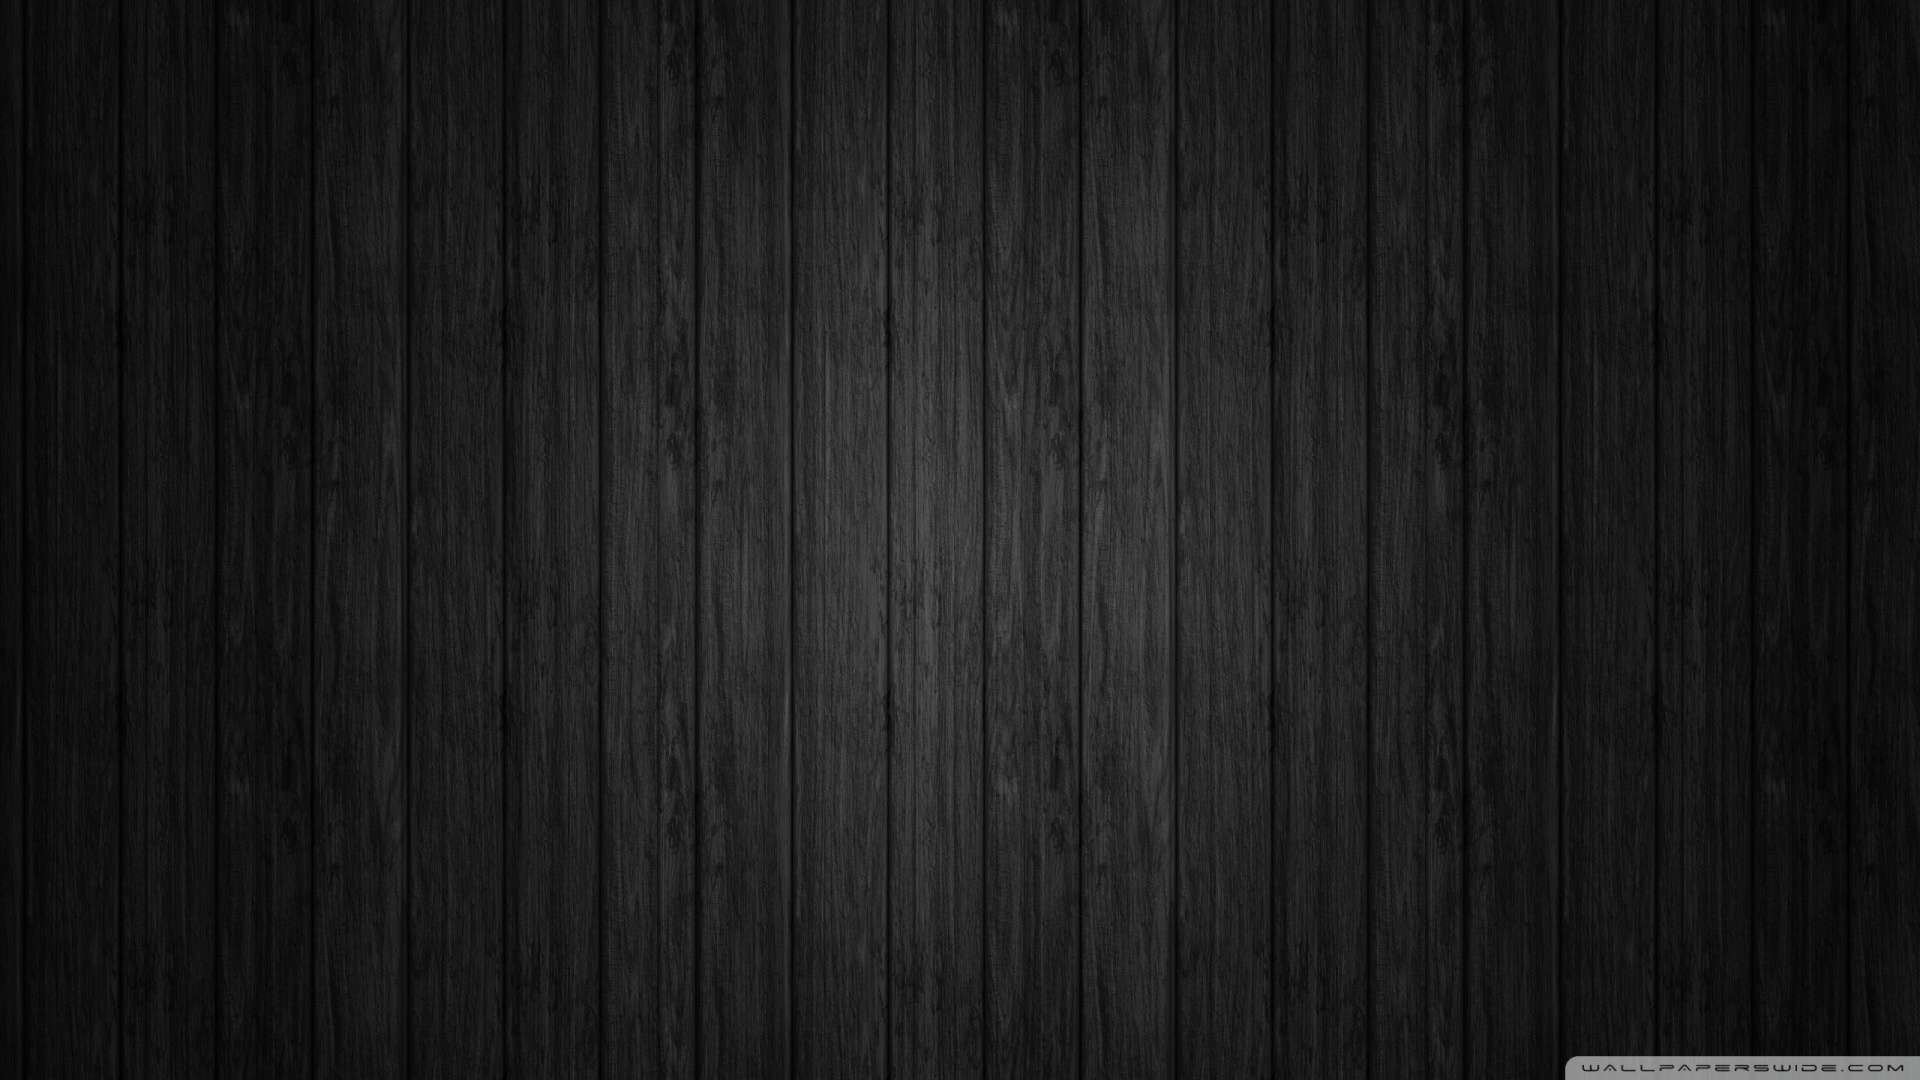 Wallpaper Black Background Wood Wallpaper 1080p HD. Upload at